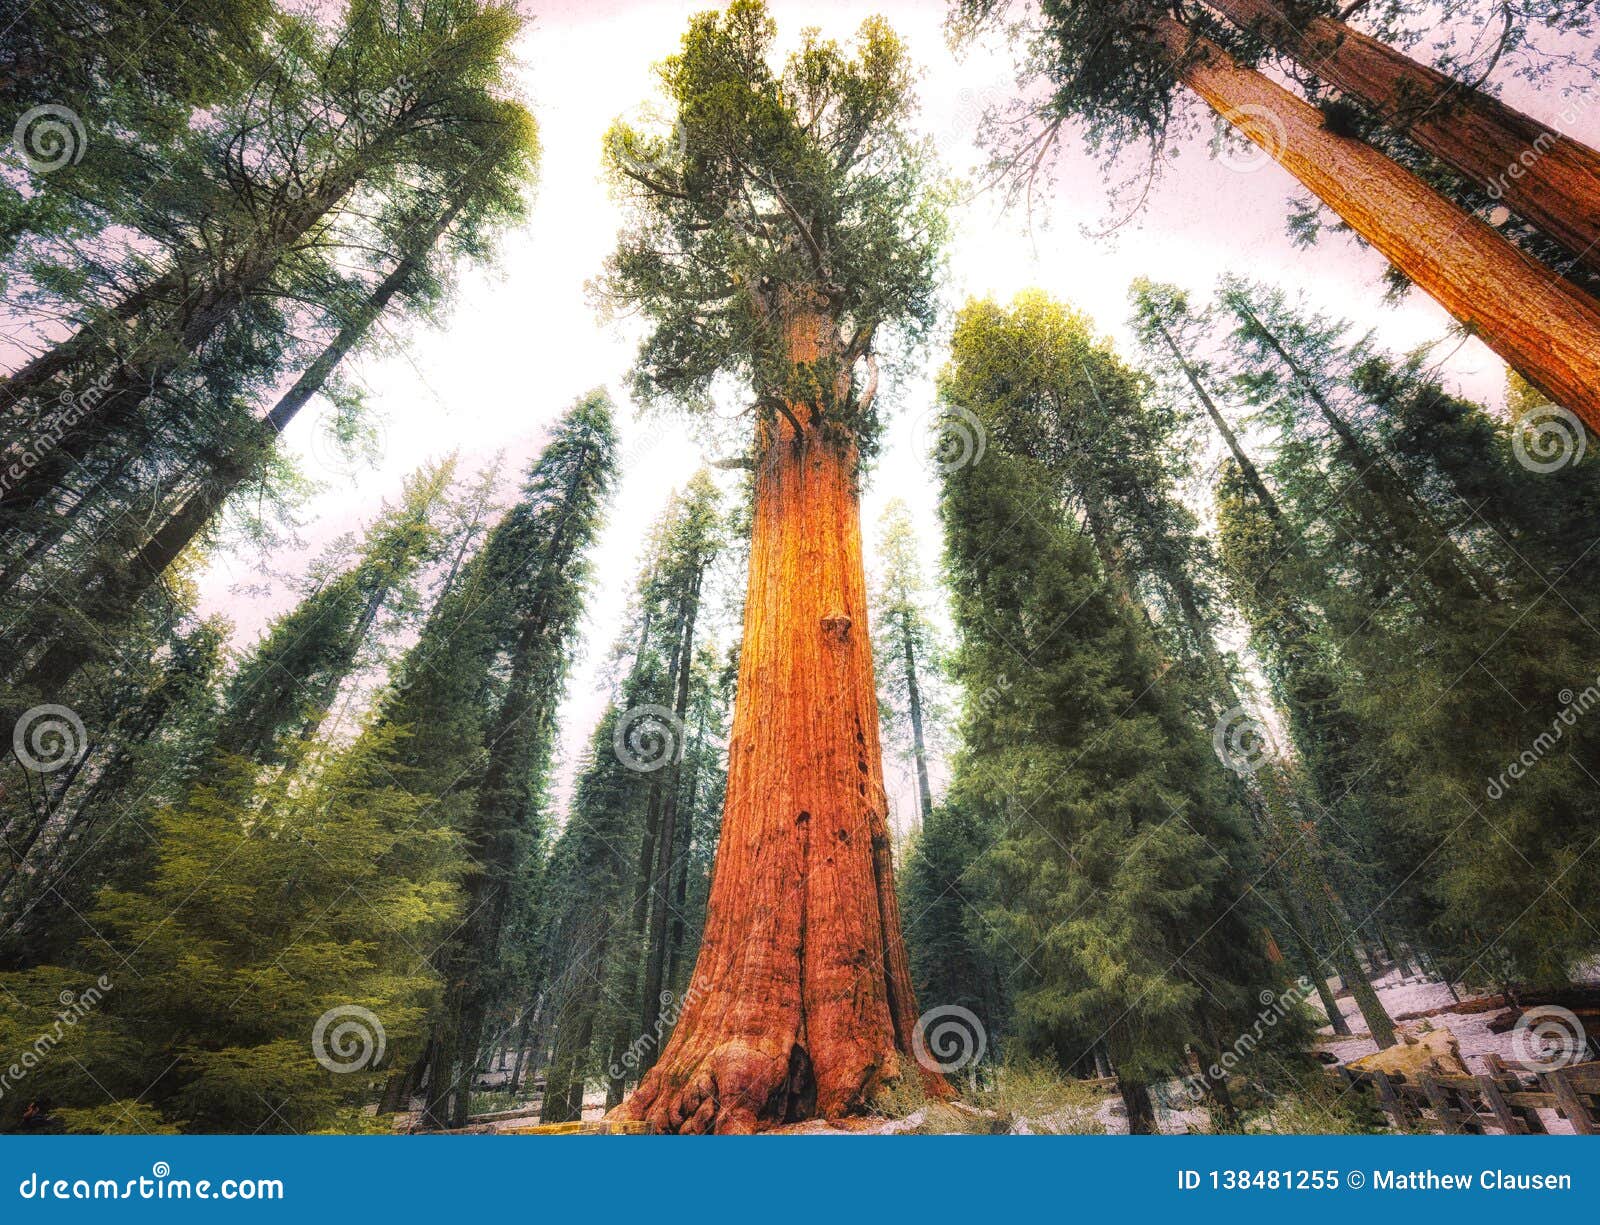 general sherman tree, sequoia national park